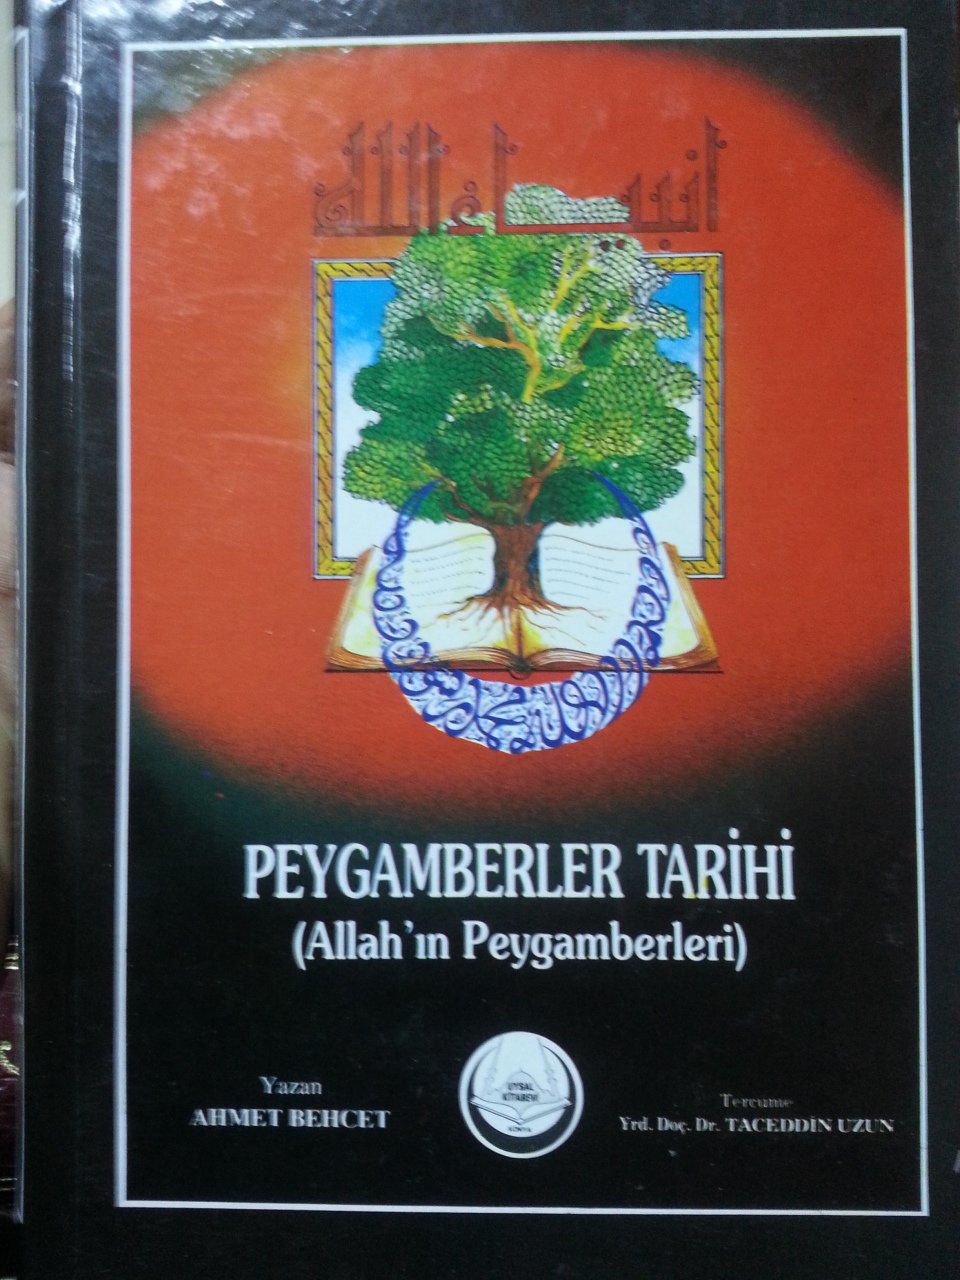 Peygamberler Tarihi, Ahmet Behçet, Uysal Kitabevi